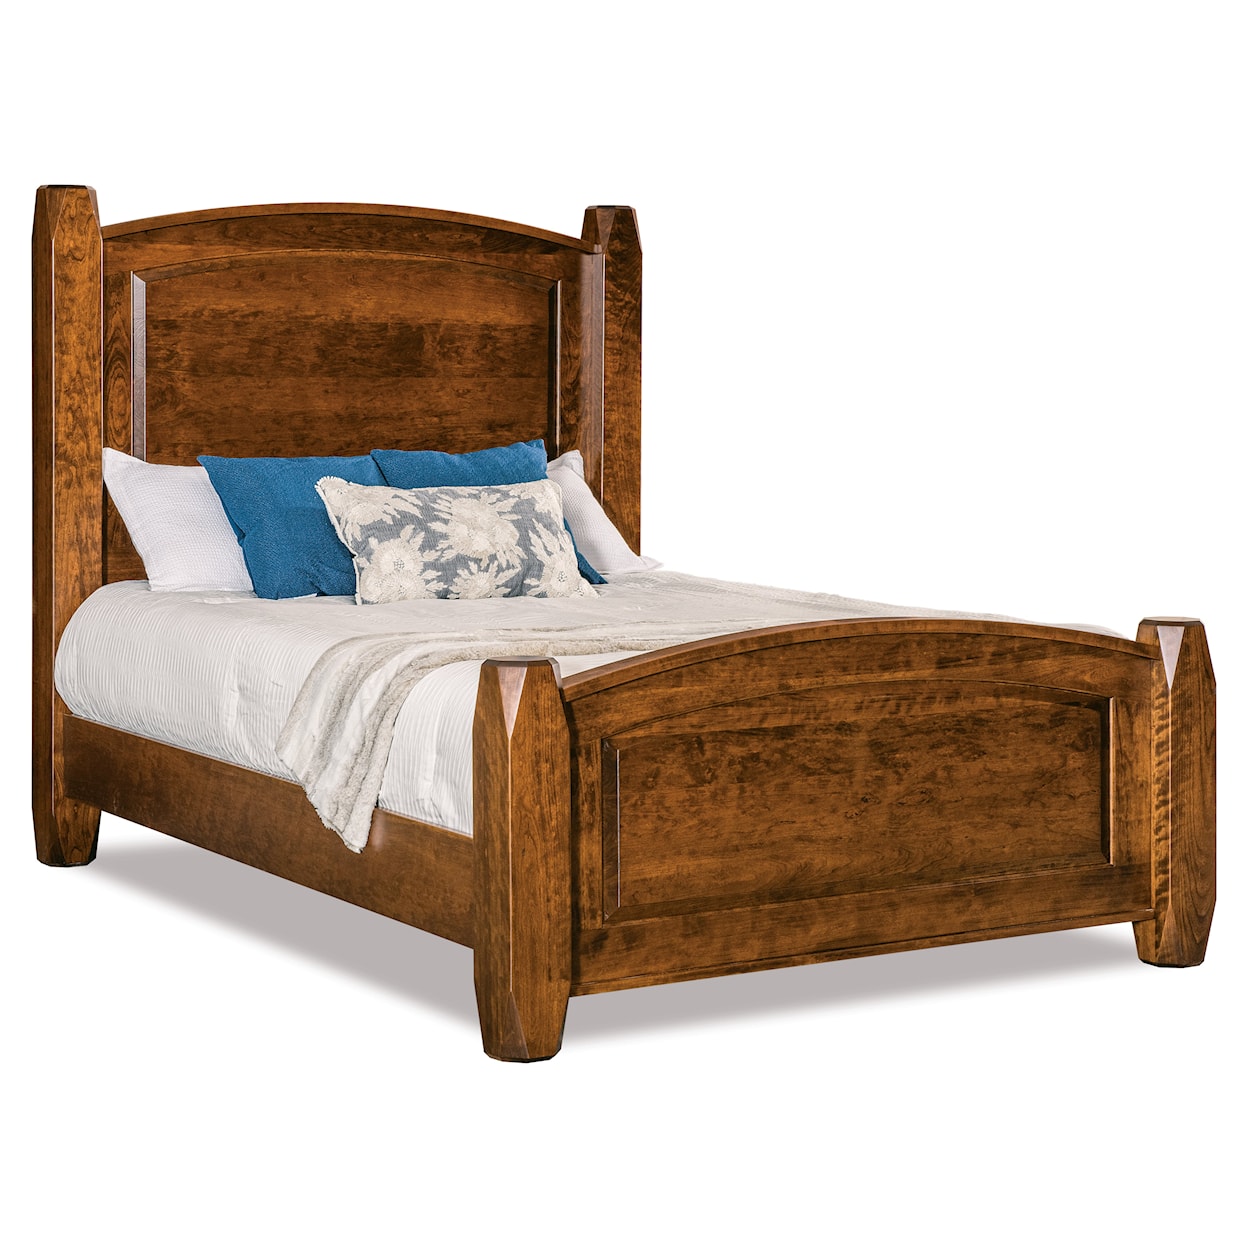 Archbold Furniture Bob Timberlake 4-Piece Queen Bedroom Set